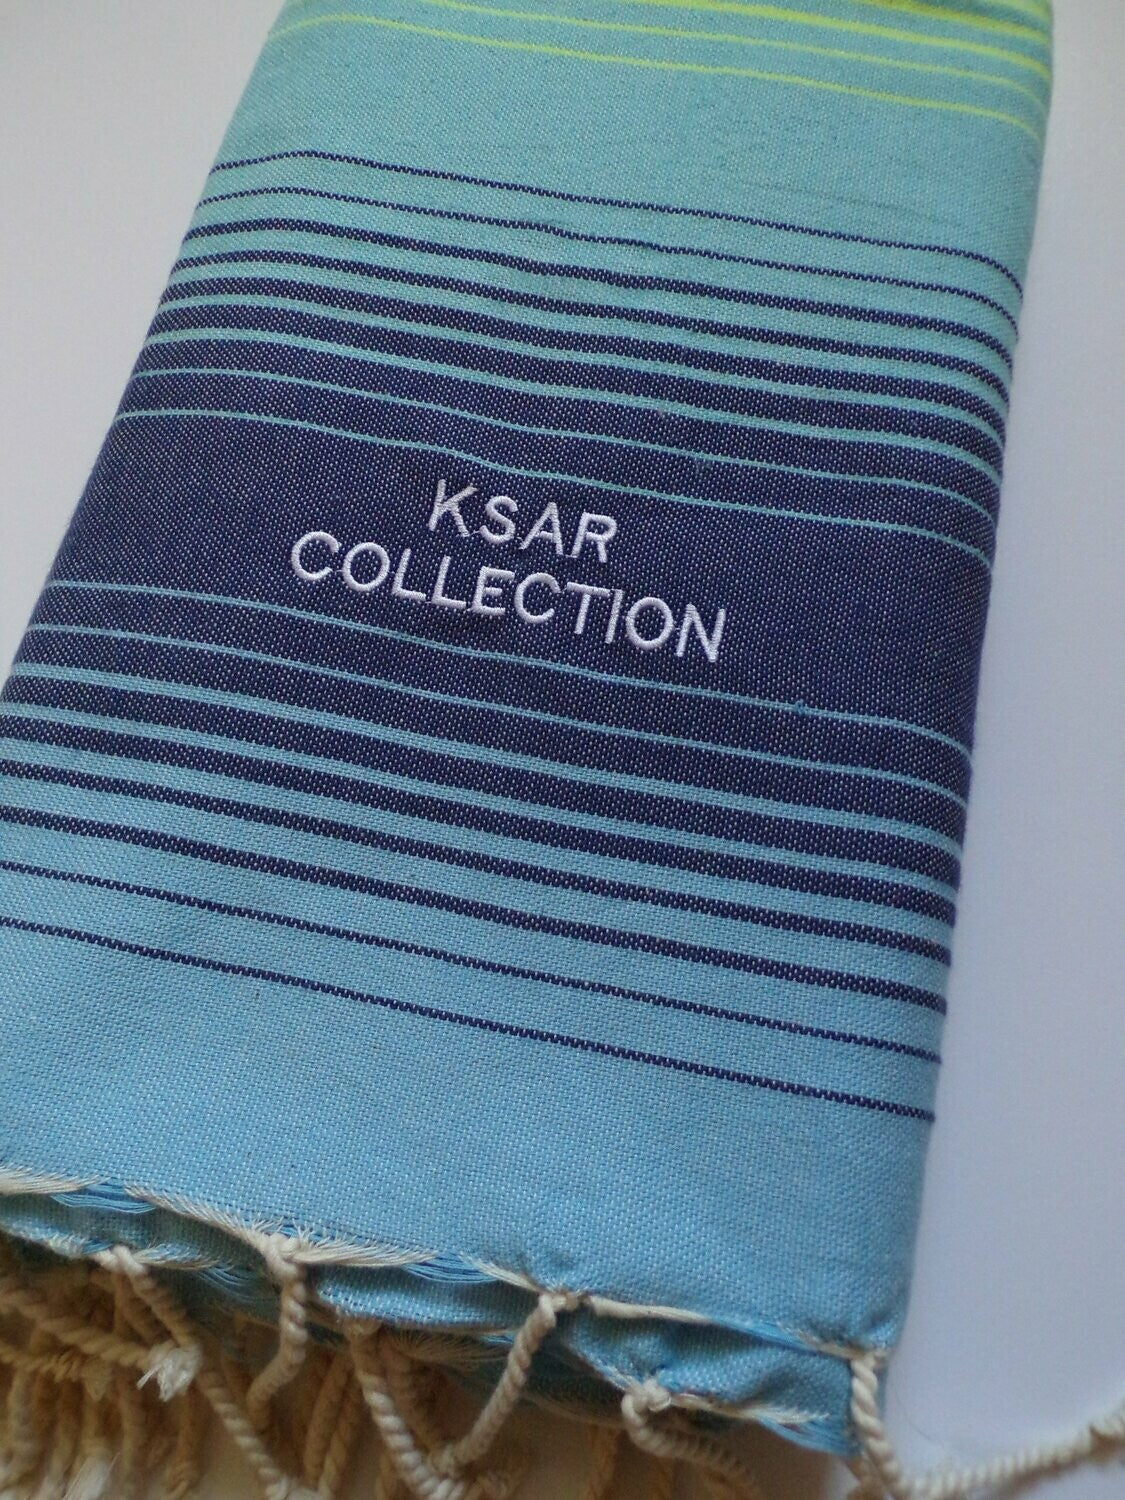 KSAR Collection blue fouta towel